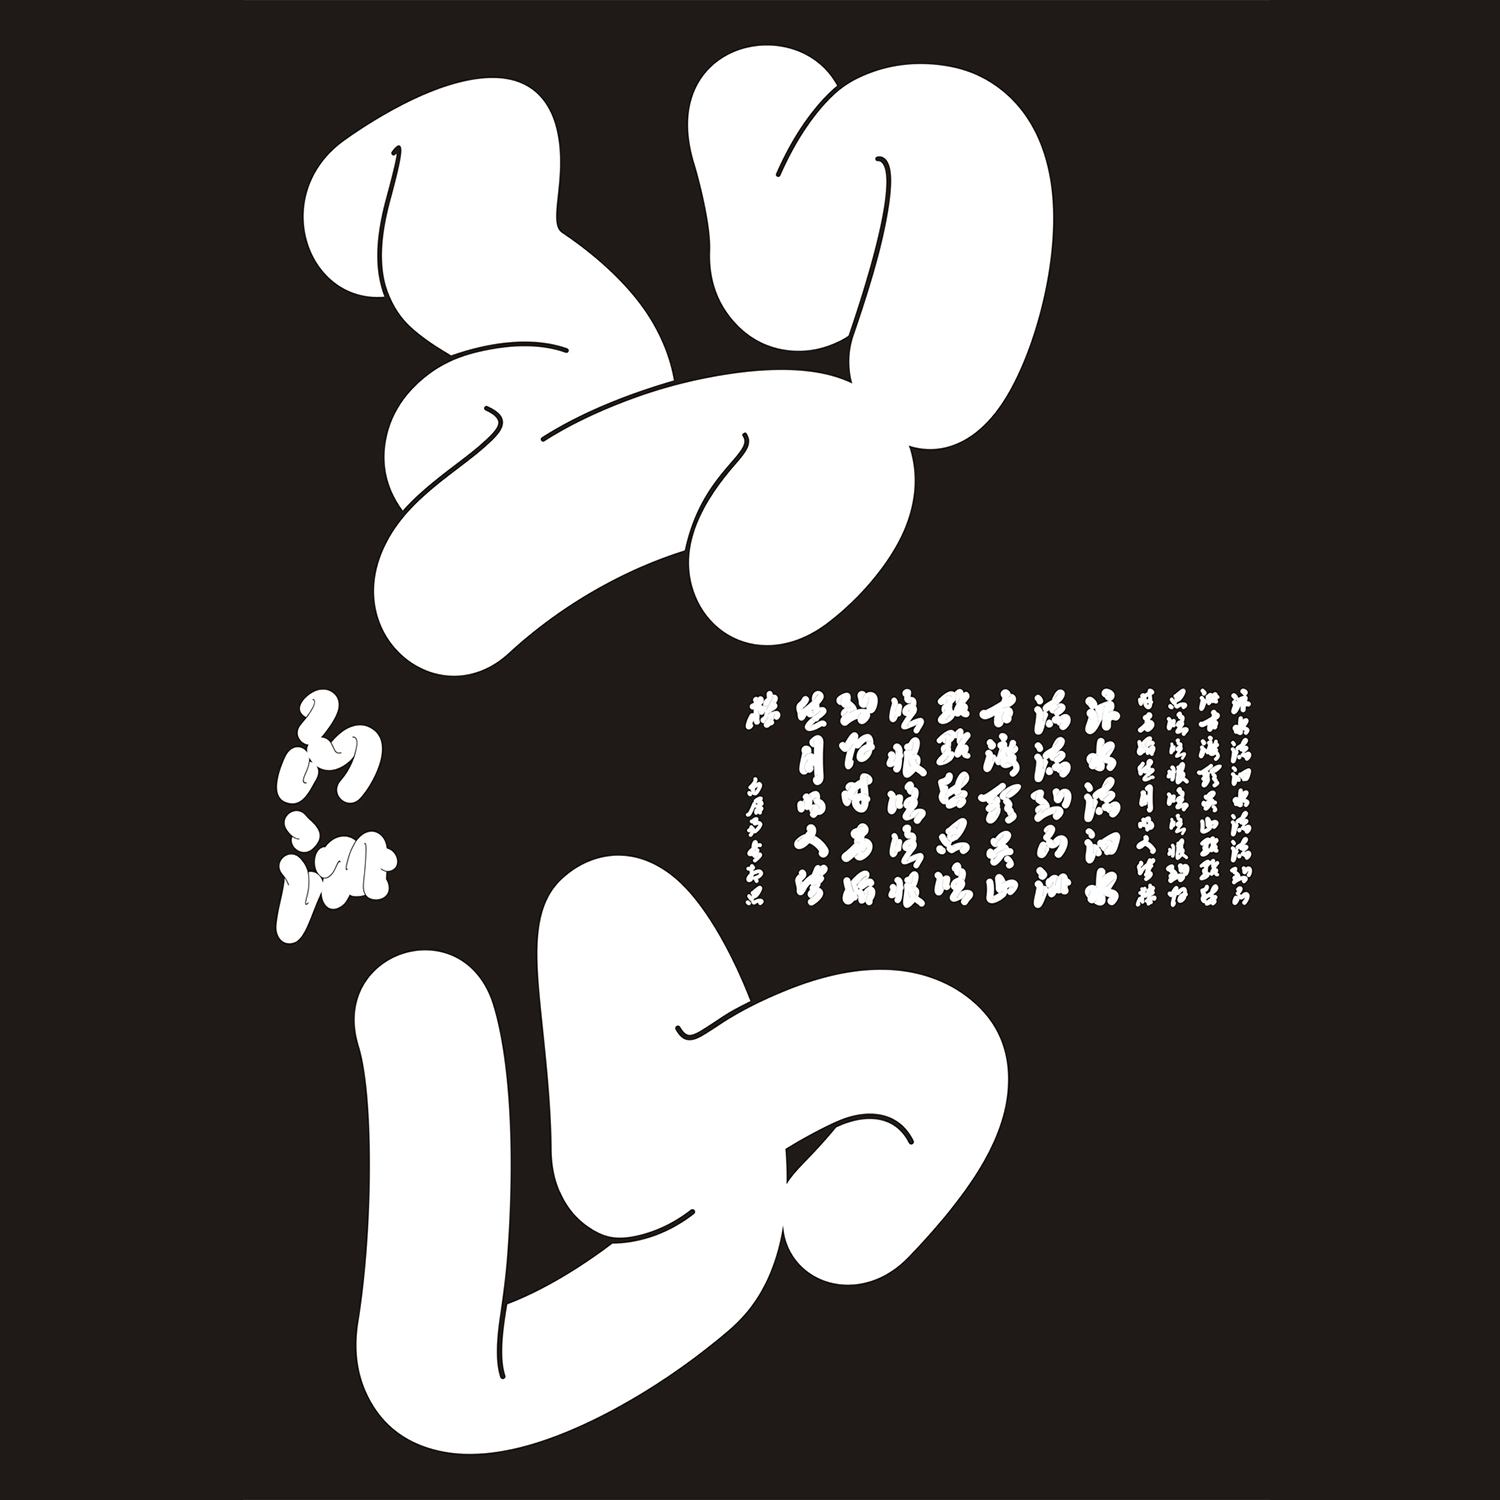 Lingering Fonts Font design by Zhang WeiMin